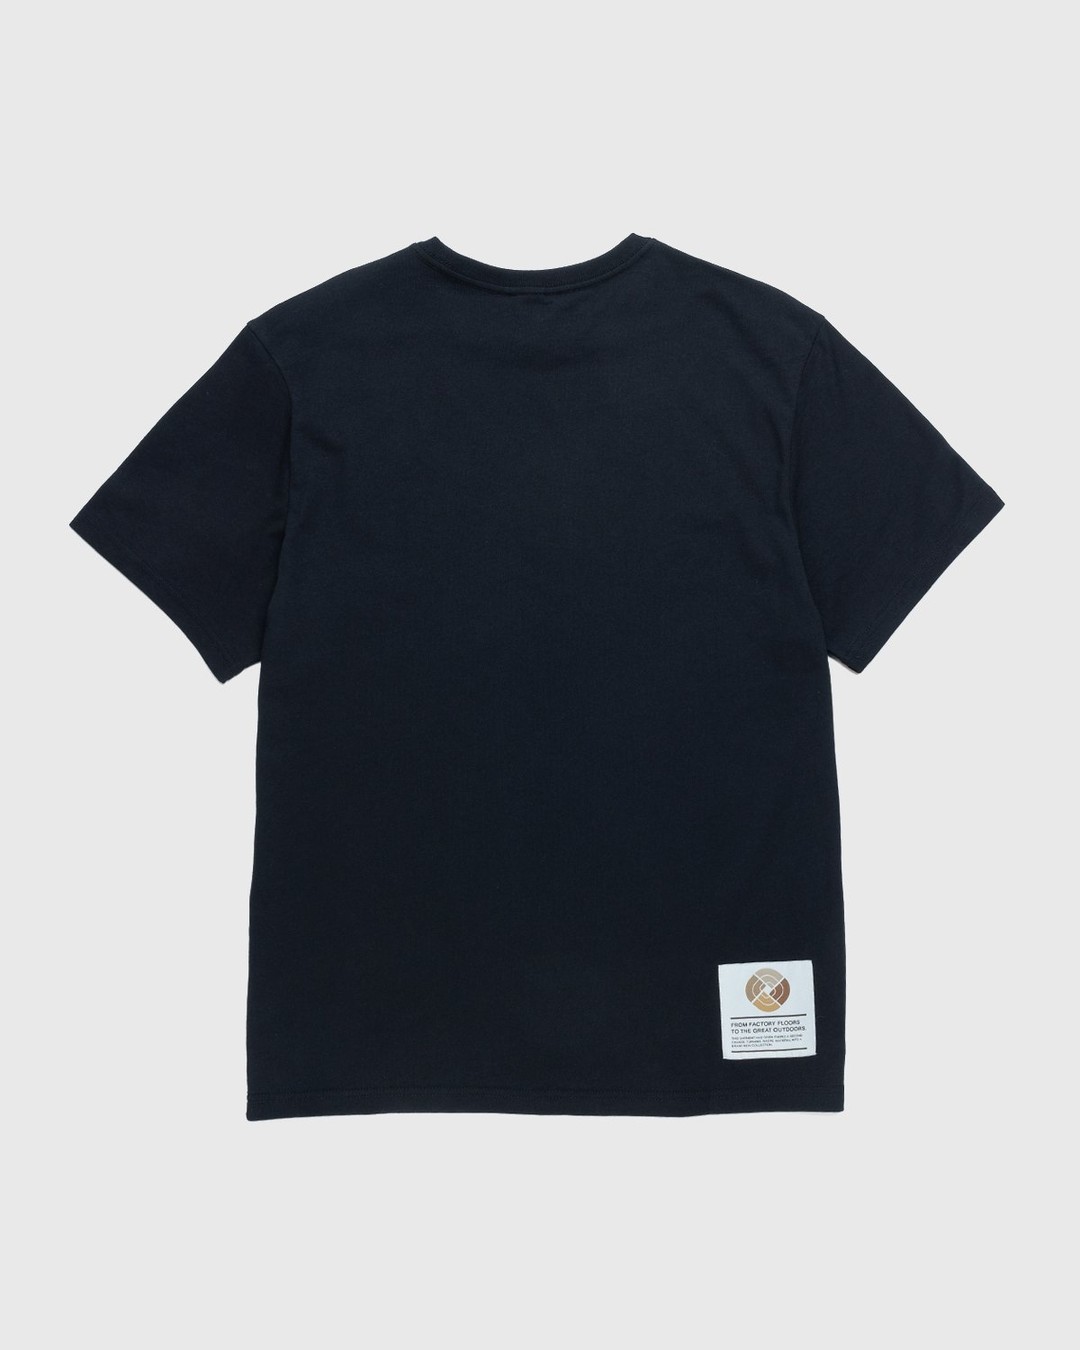 The North Face – Scrap T-Shirt Black - T-Shirts - Black - Image 2